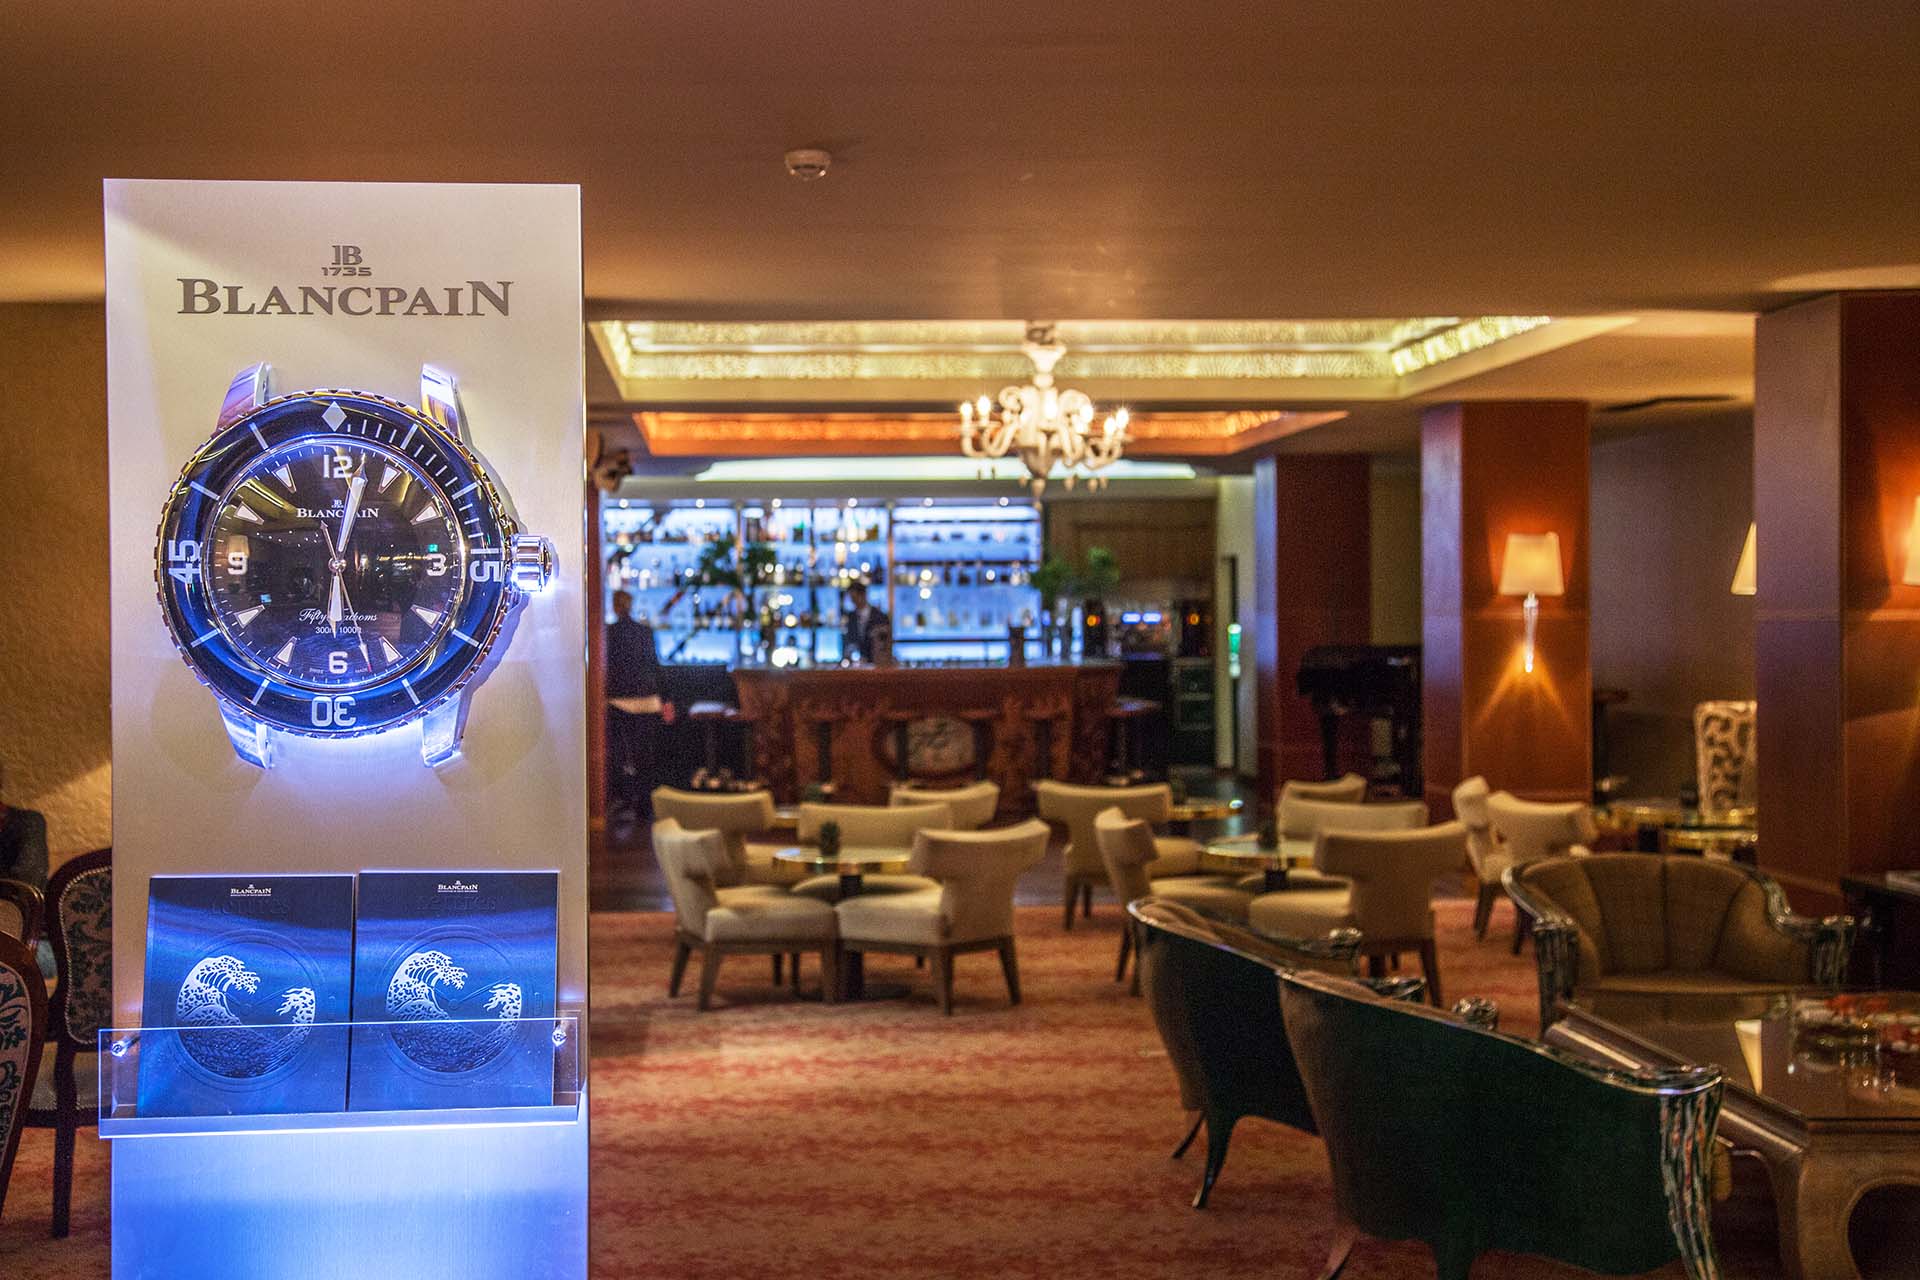 Blancpain presentation at Tschuggen Grand Hotel in Arosa in 2018